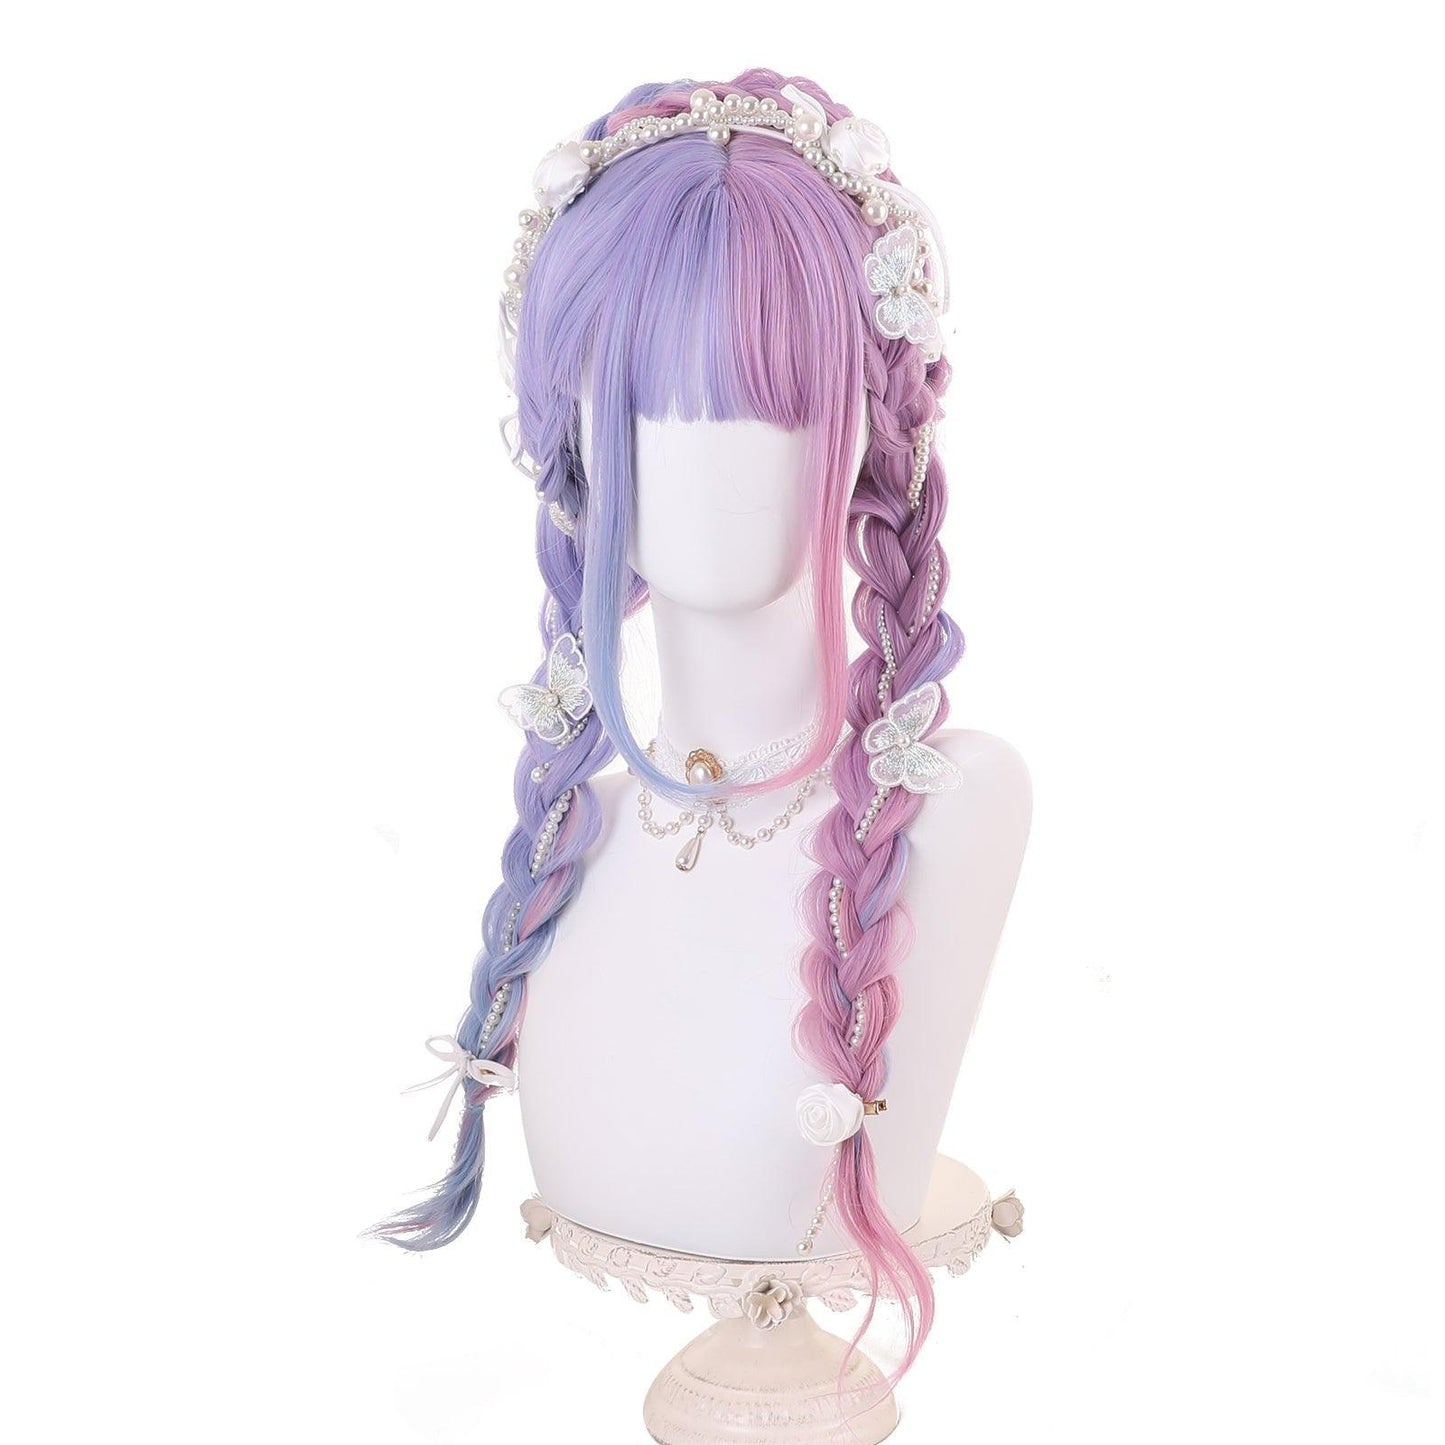 coscrew Rainbow Candy Wigs Half blue and half purple Long Lolita Wig LOLI-028 - coscrew